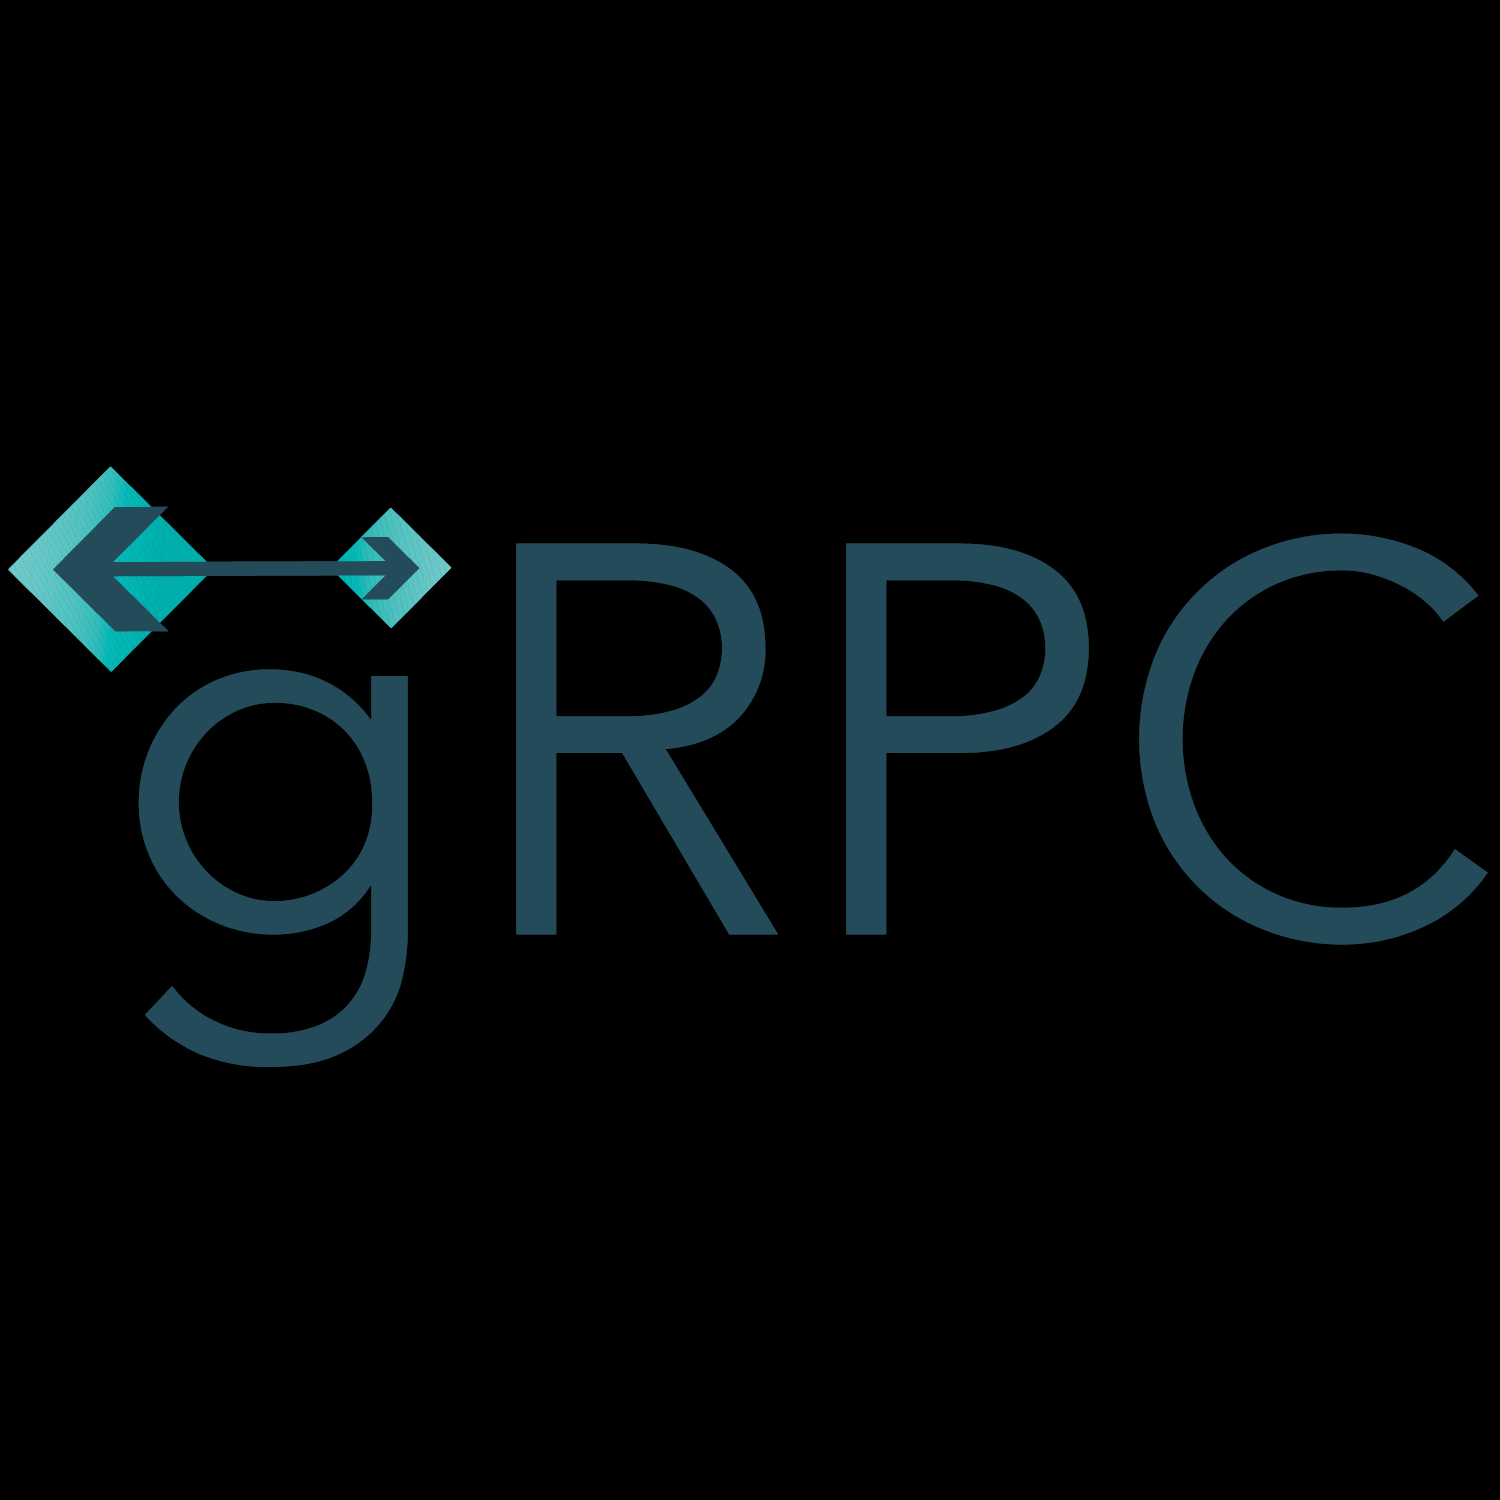 gRPC logo on black background